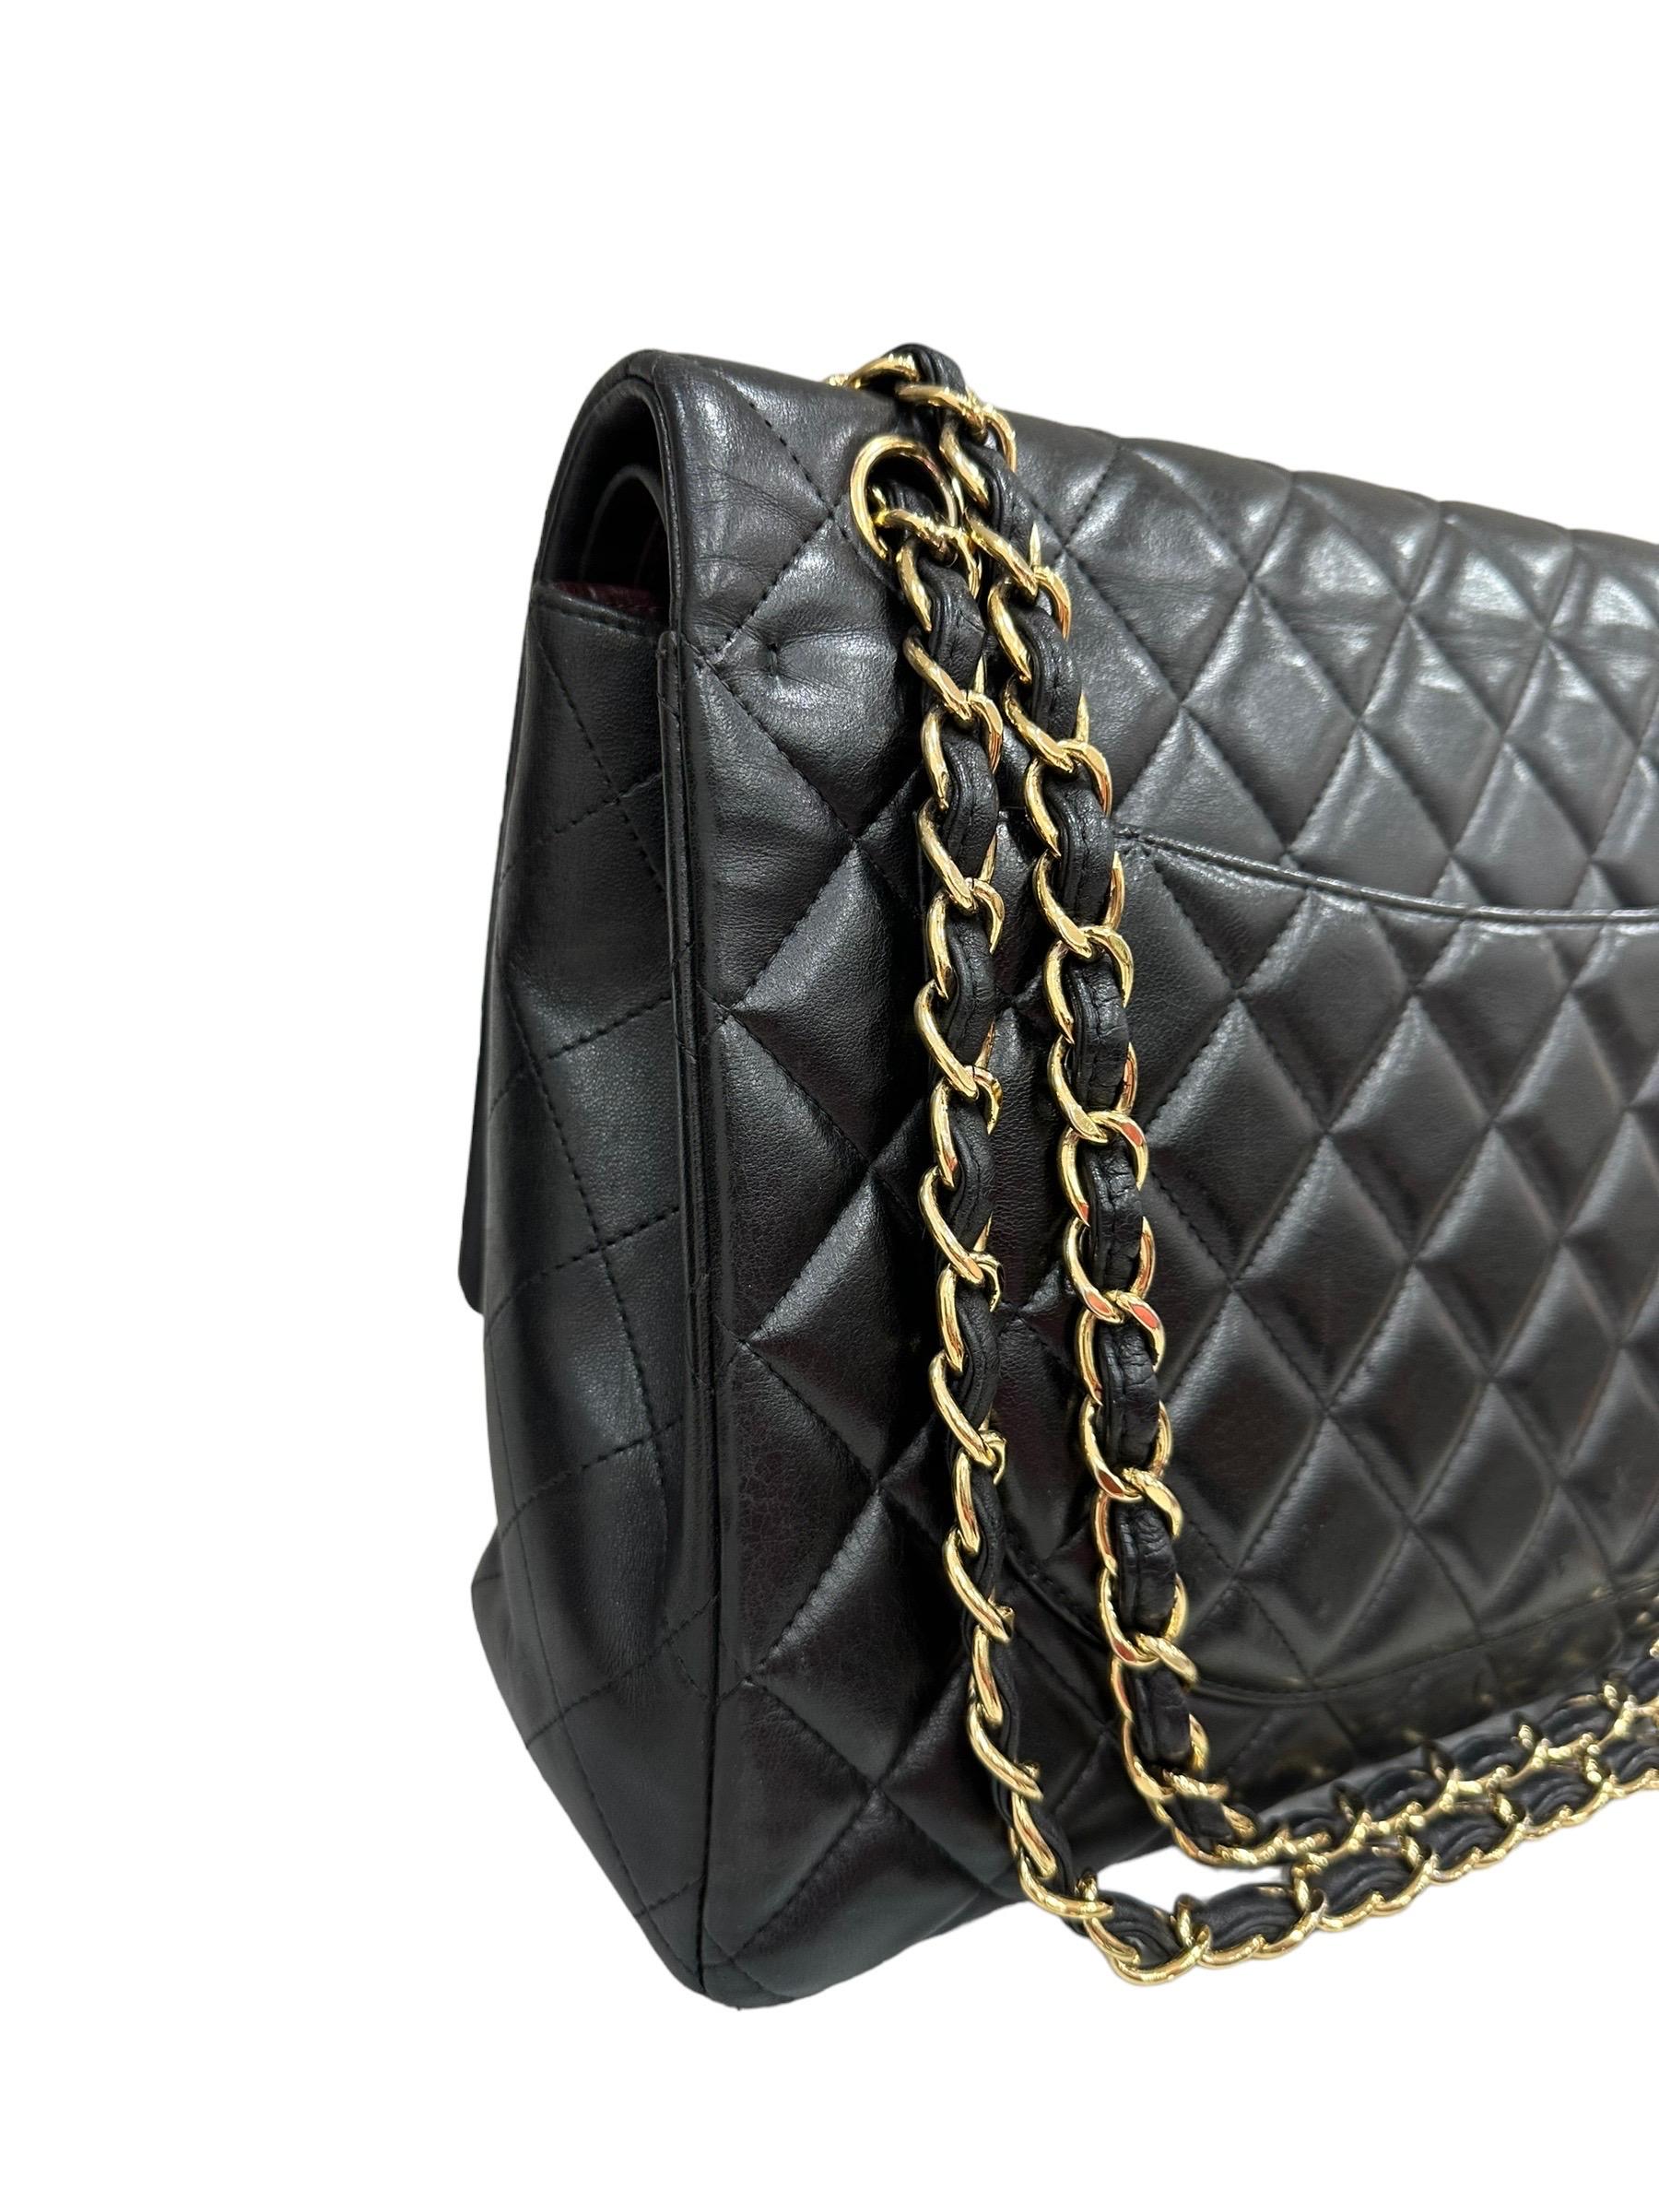 2011 Chanel Timeless Maxi Jumbo Black Leather Top Shoulder Bag For Sale 1